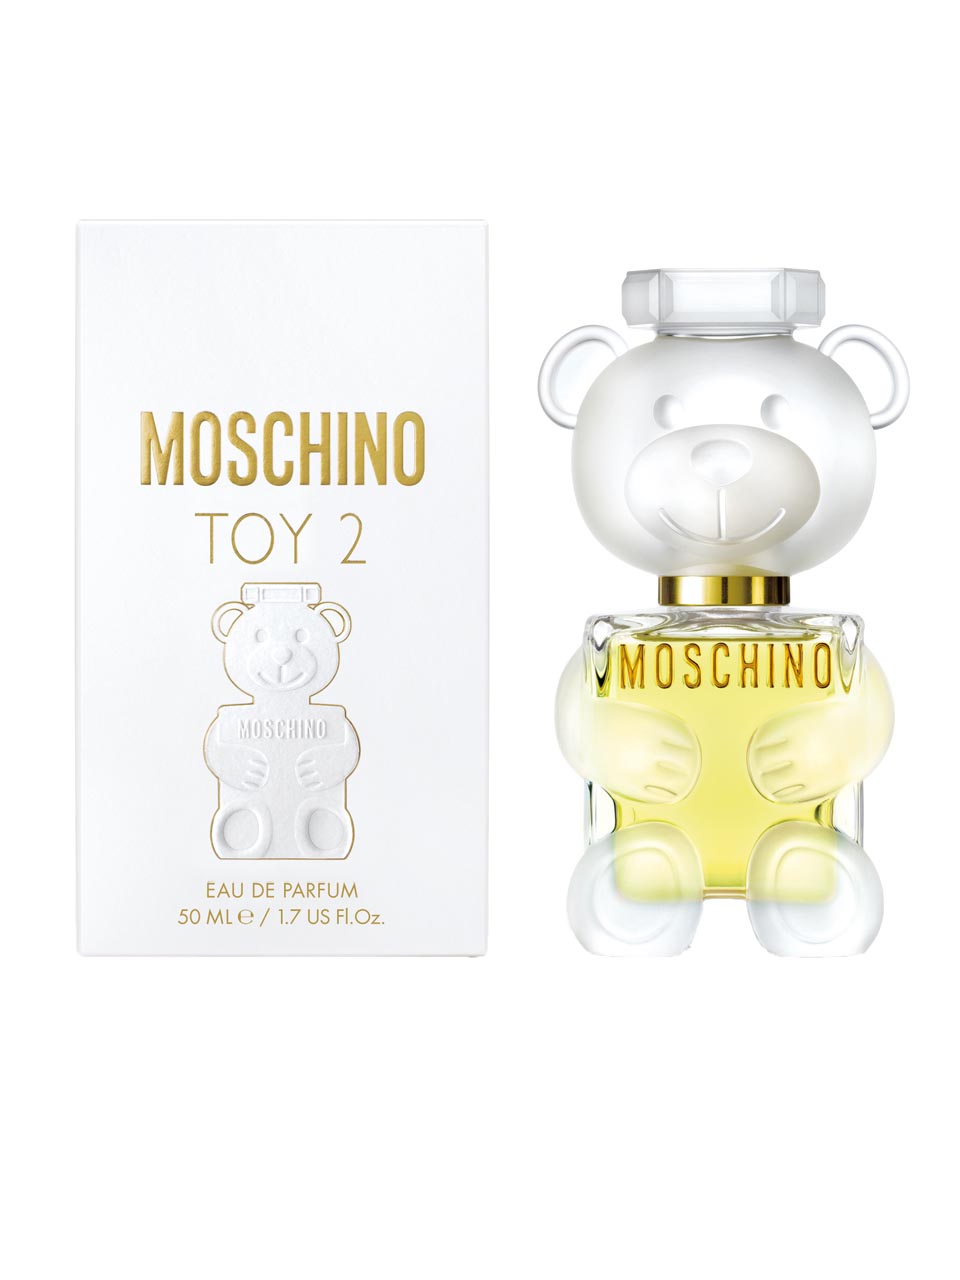 Moschino Toy 2 Eau de Parfum 50 ml null - onesize - 1